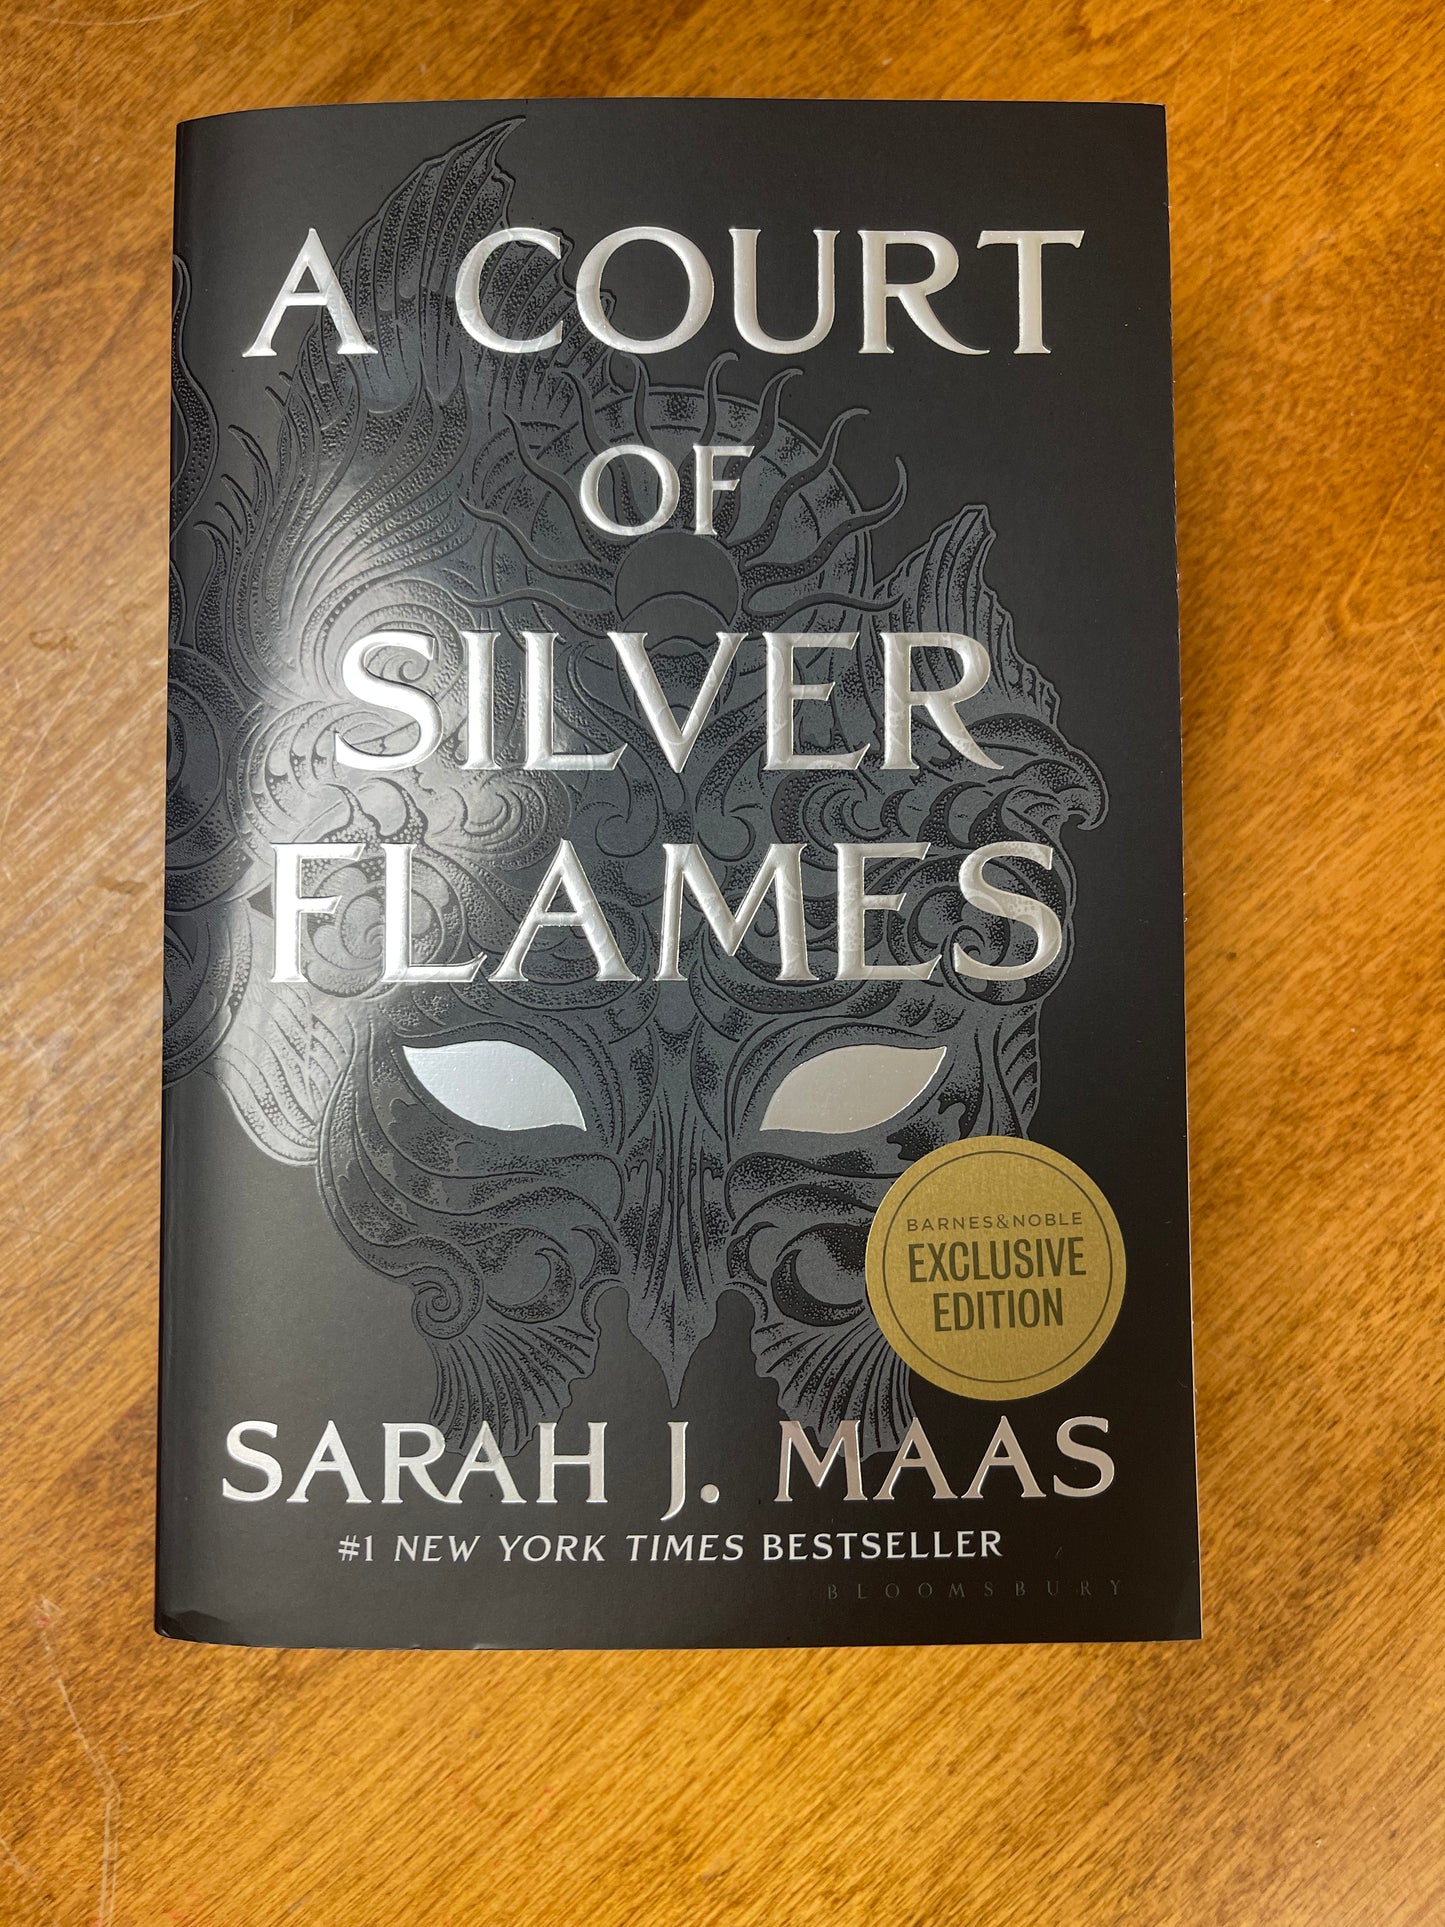 A court of silver flames - Sarah Maas - RARE Barnes & Nobel Exclusive Edition